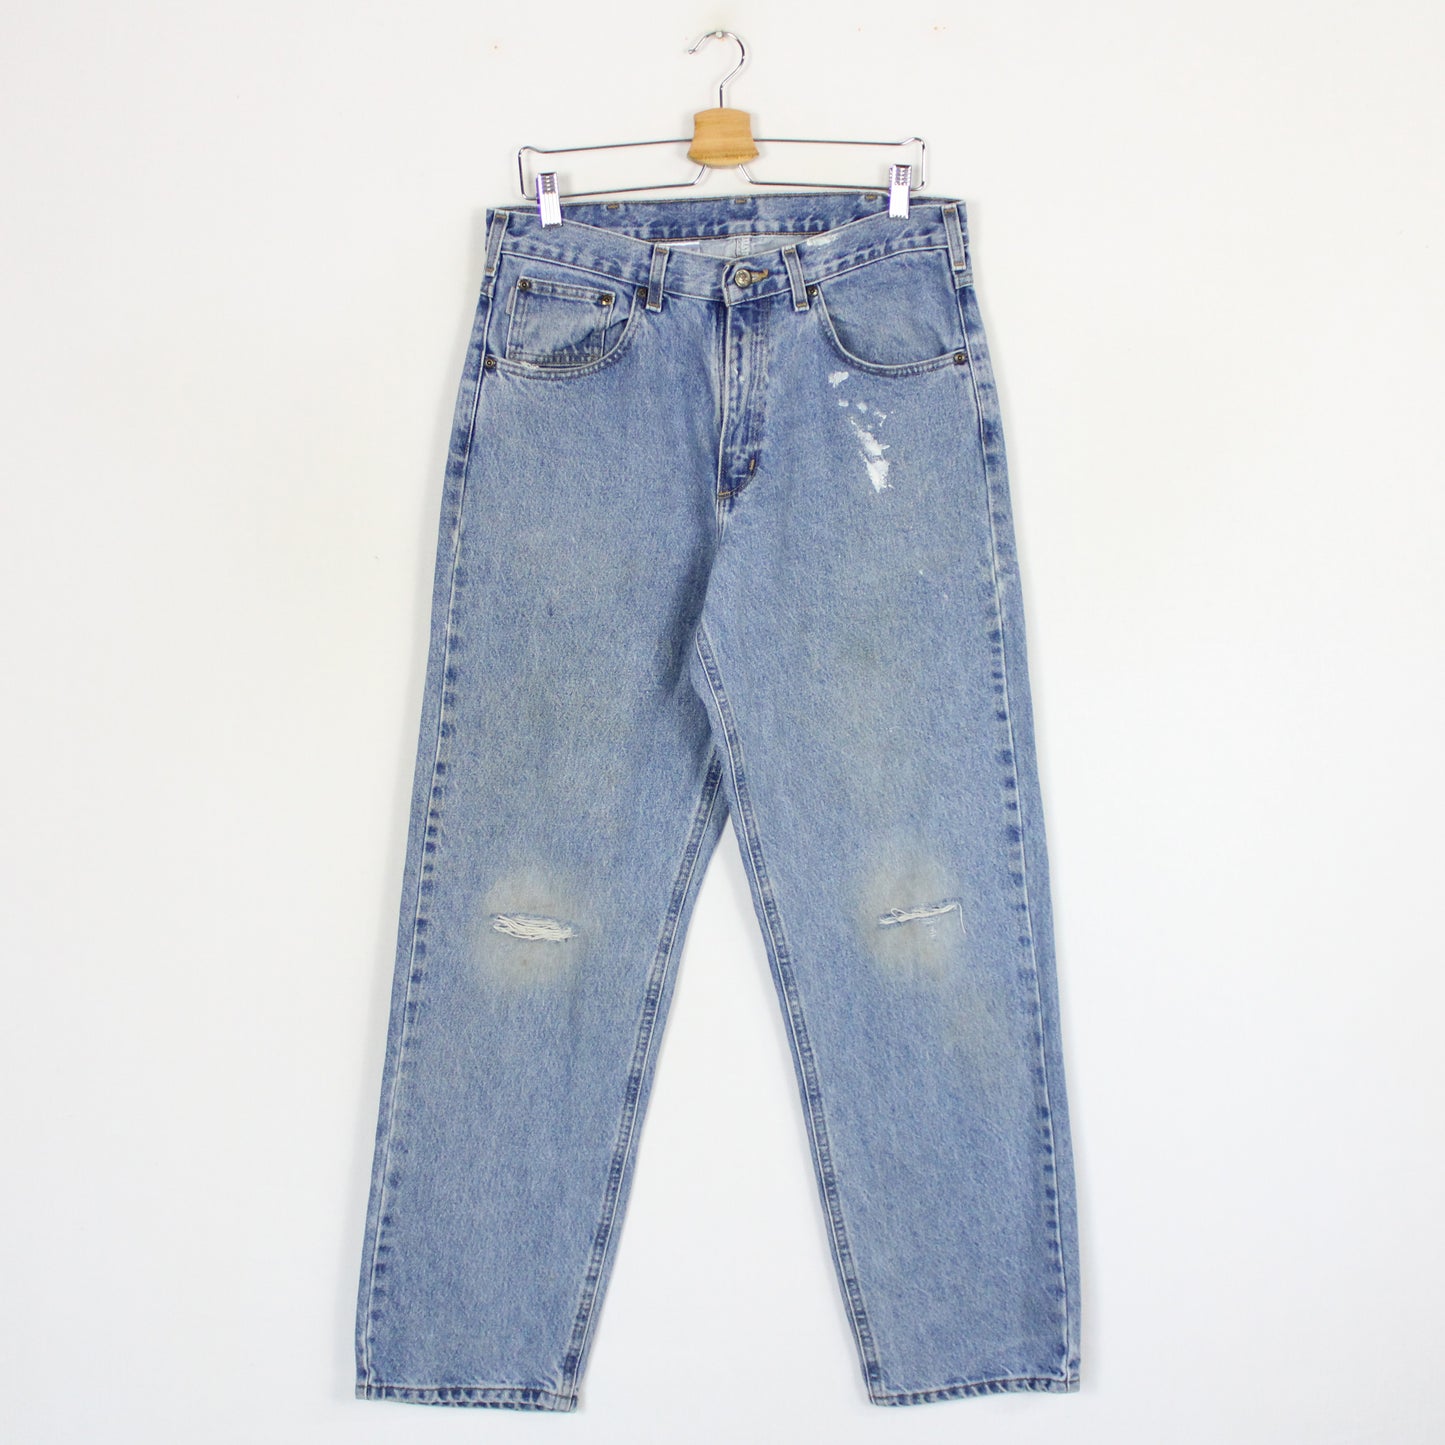 Vintage Carhartt Denim Jeans - 34x32